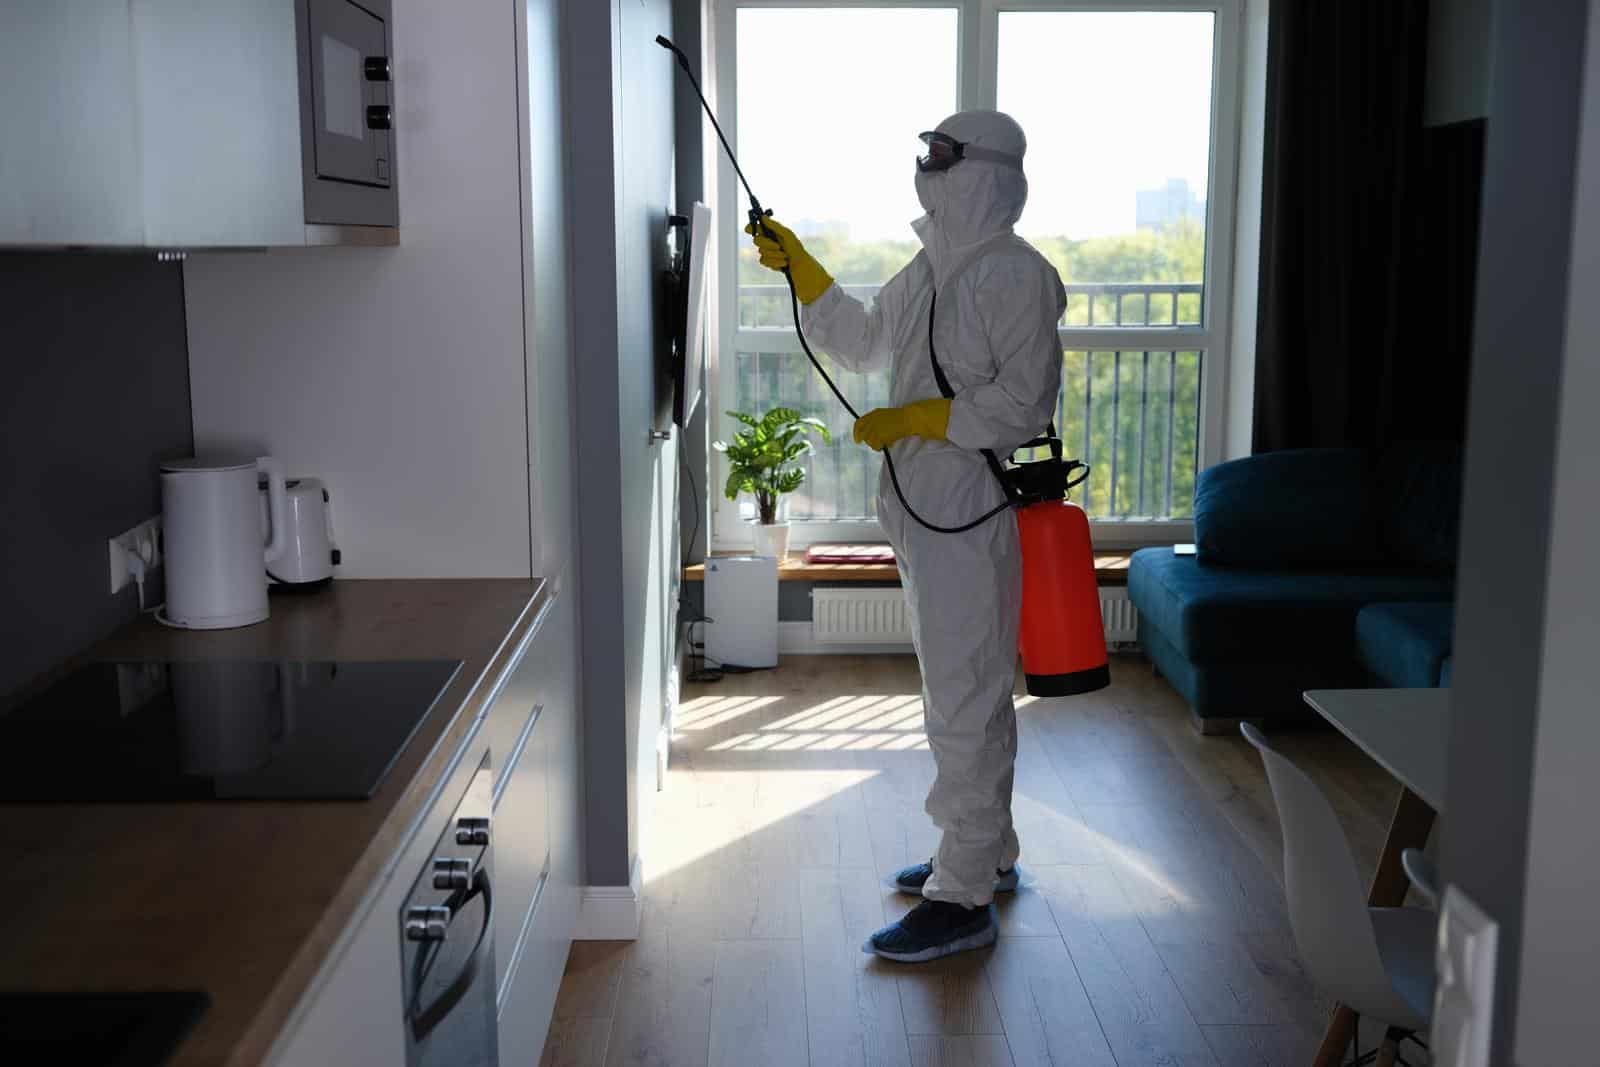 pest control agency - hygienedunia blog